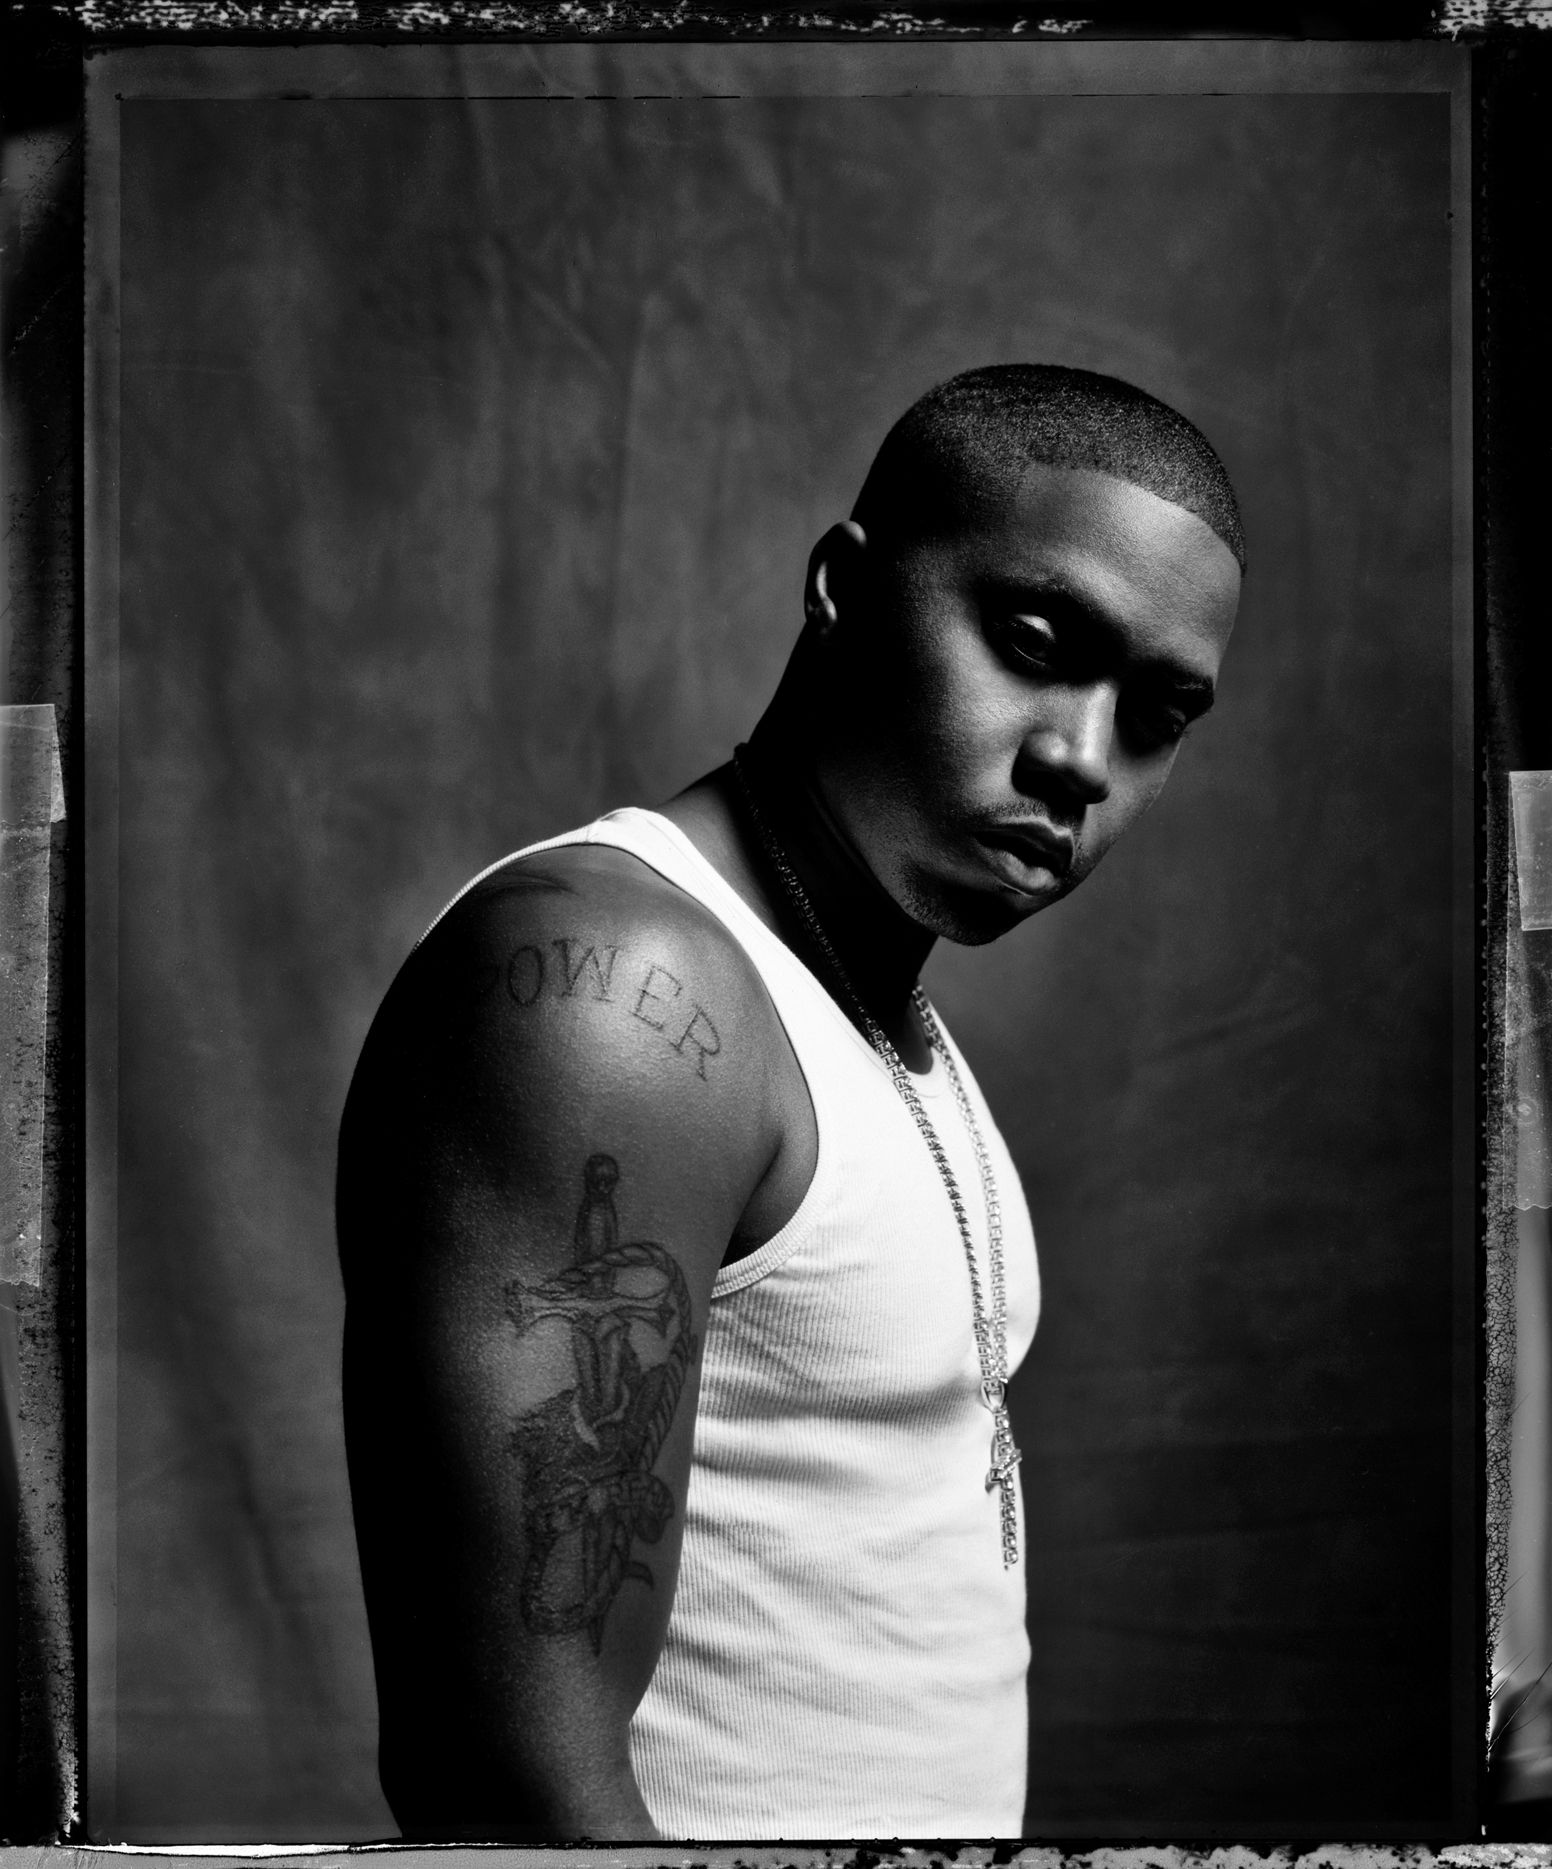 Download Poster Of American Rapper Nas Wallpaper | Wallpapers.com